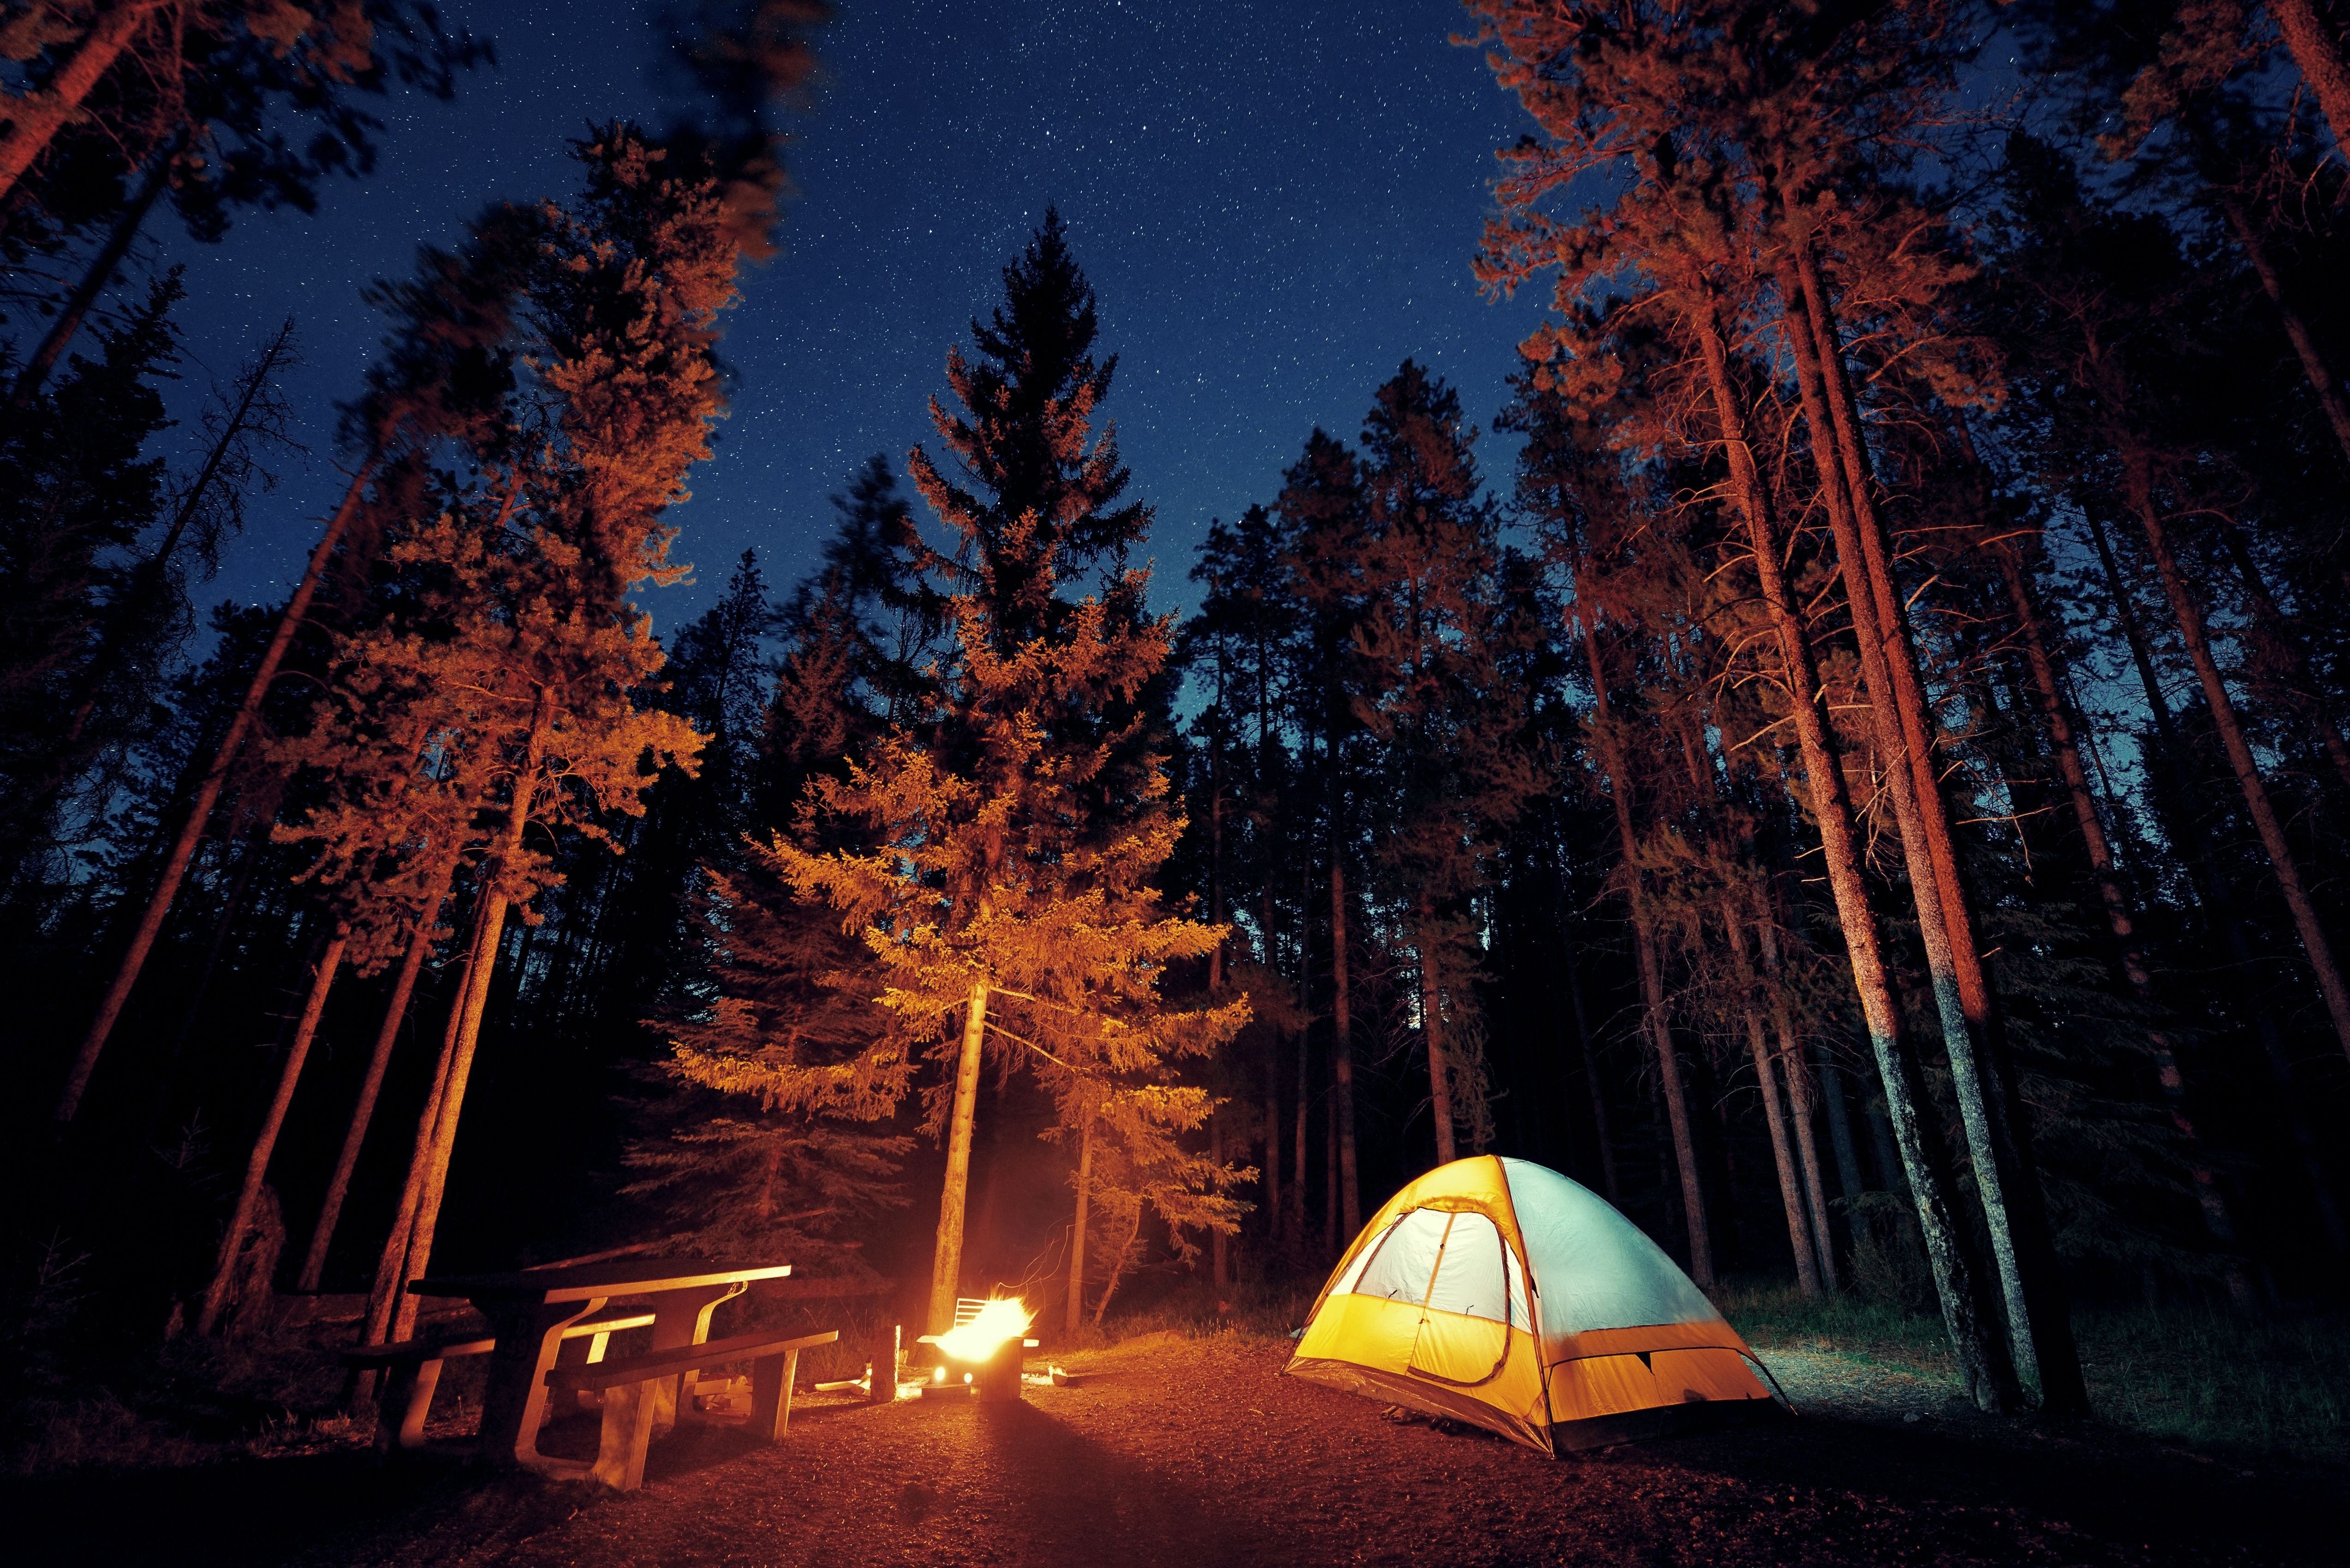 Night camp. Палатка Camping Tent. Палатка костёр кемпинг. Кемпинг атмосфера Тургояк. Кемпинг на природе.